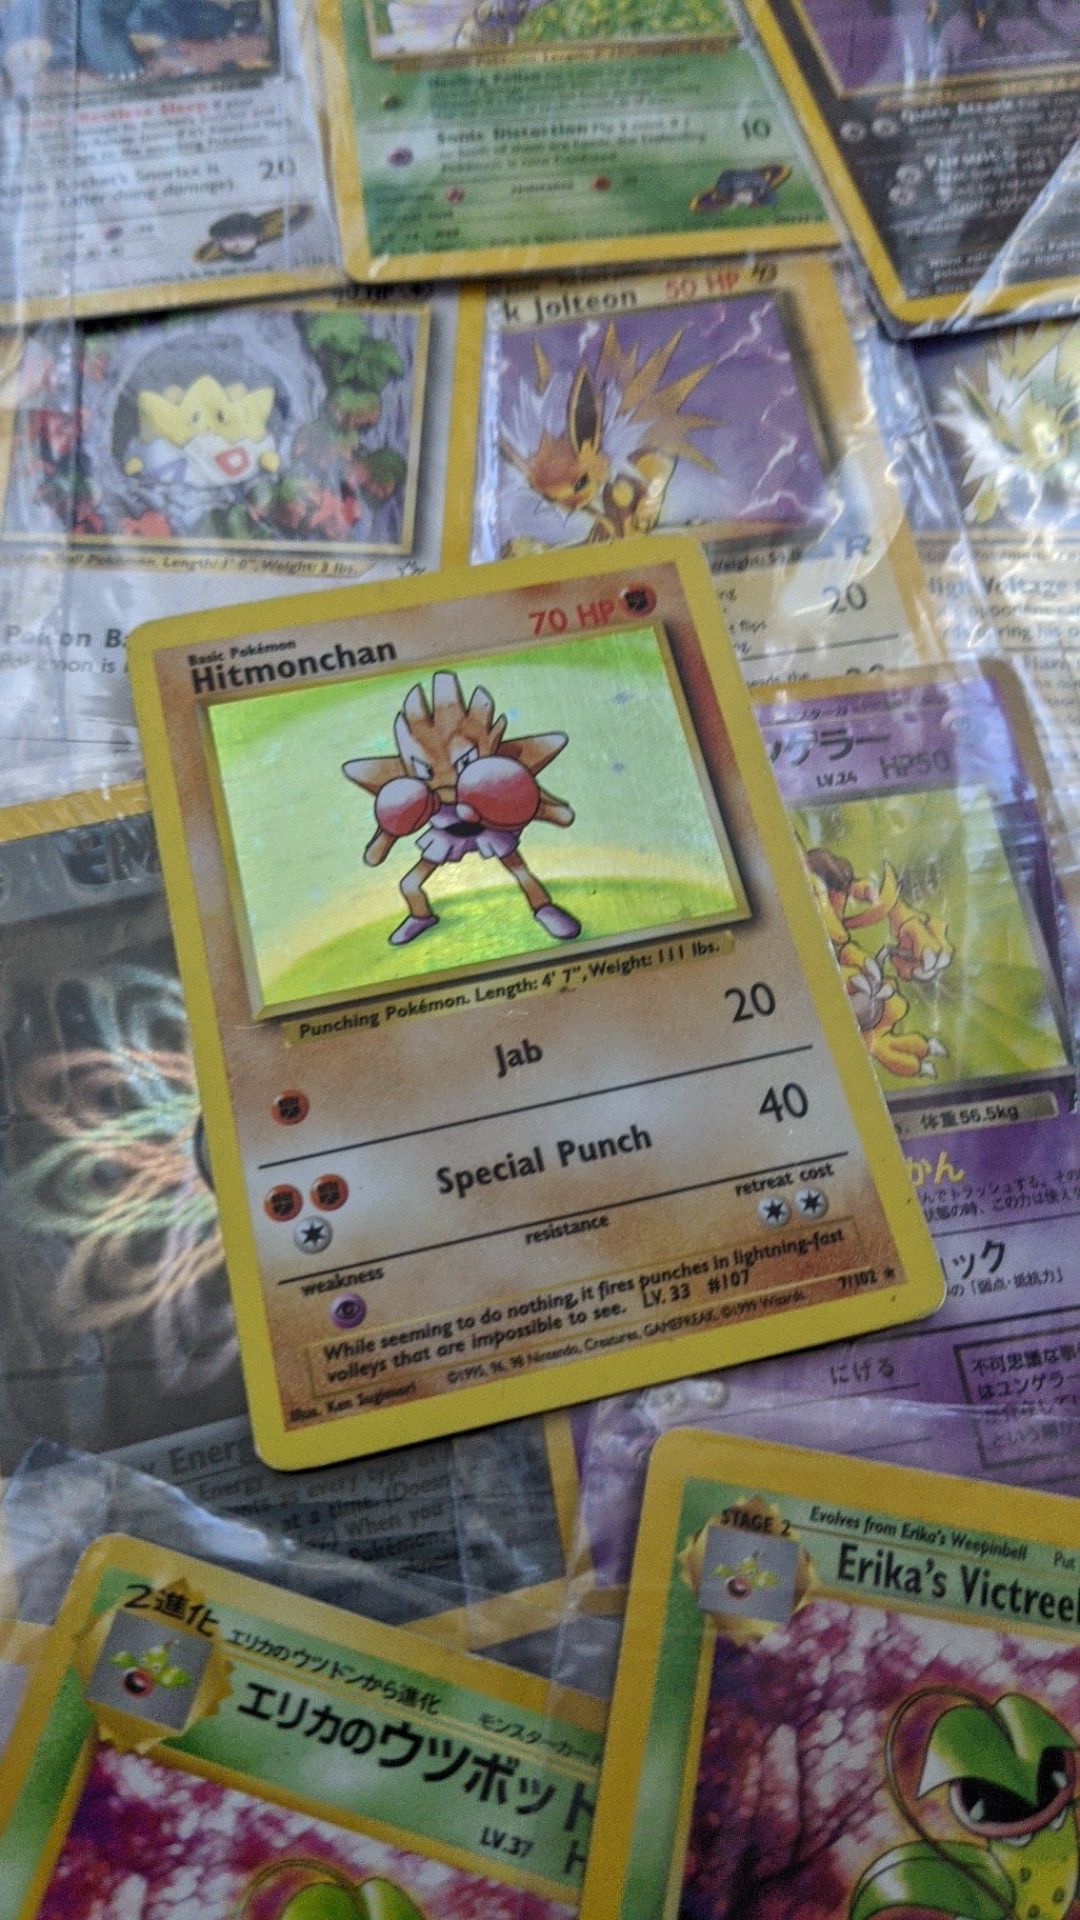 HITMONCHAN **HOLO*RARE Pokemon Card from the original base Set**